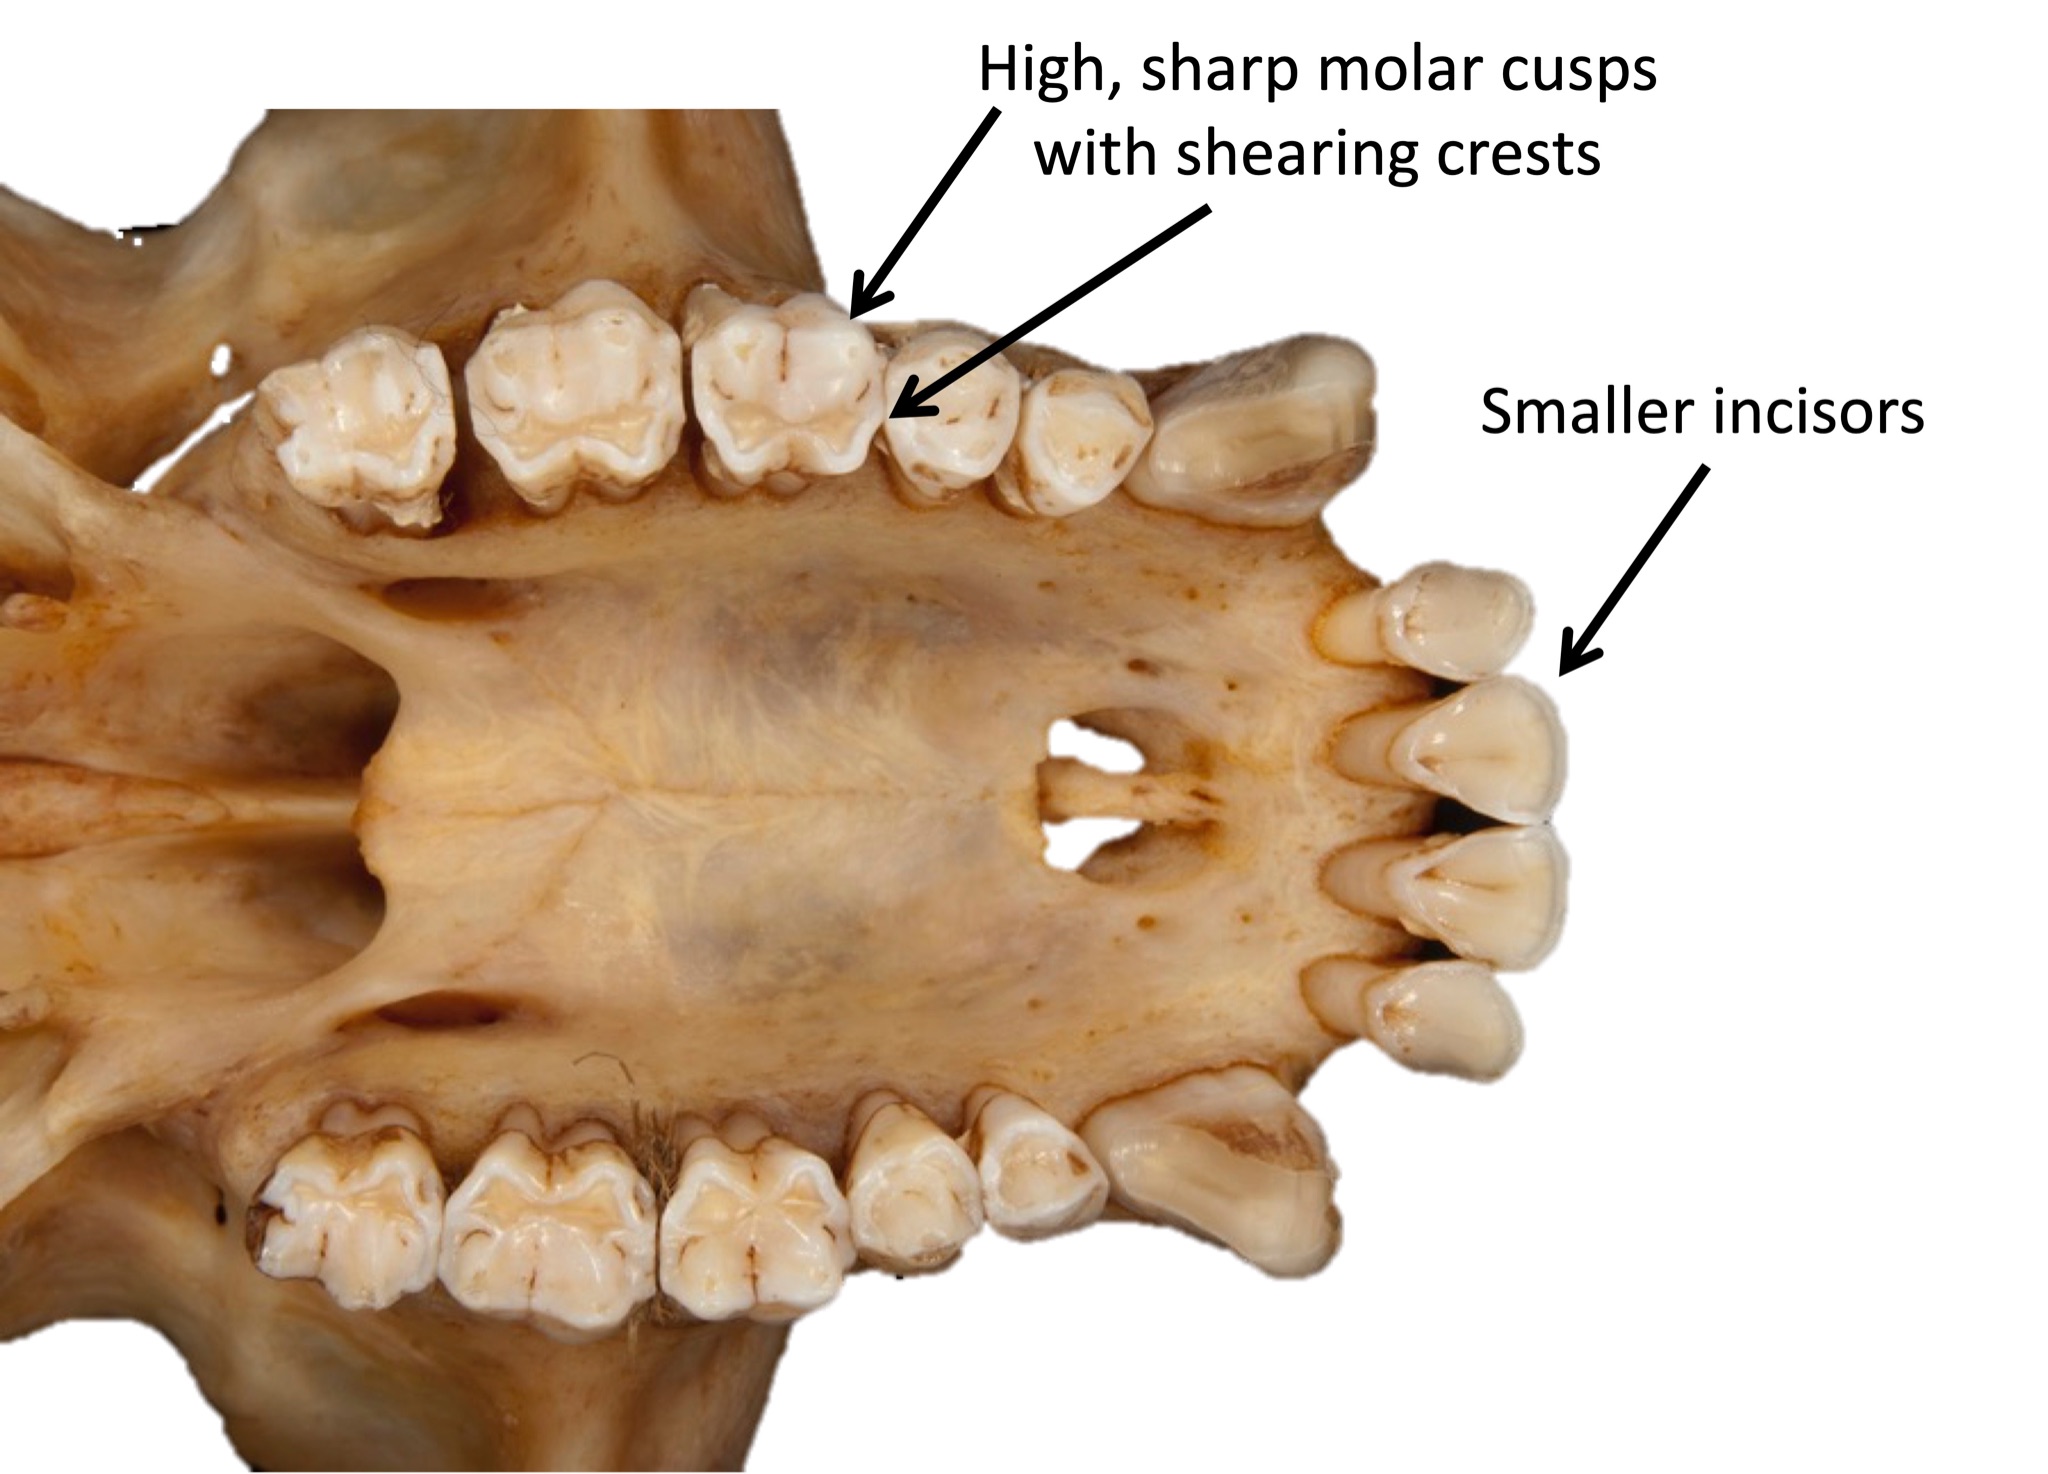 Upper teeth and maxilla of a monkey shows folivore traits.